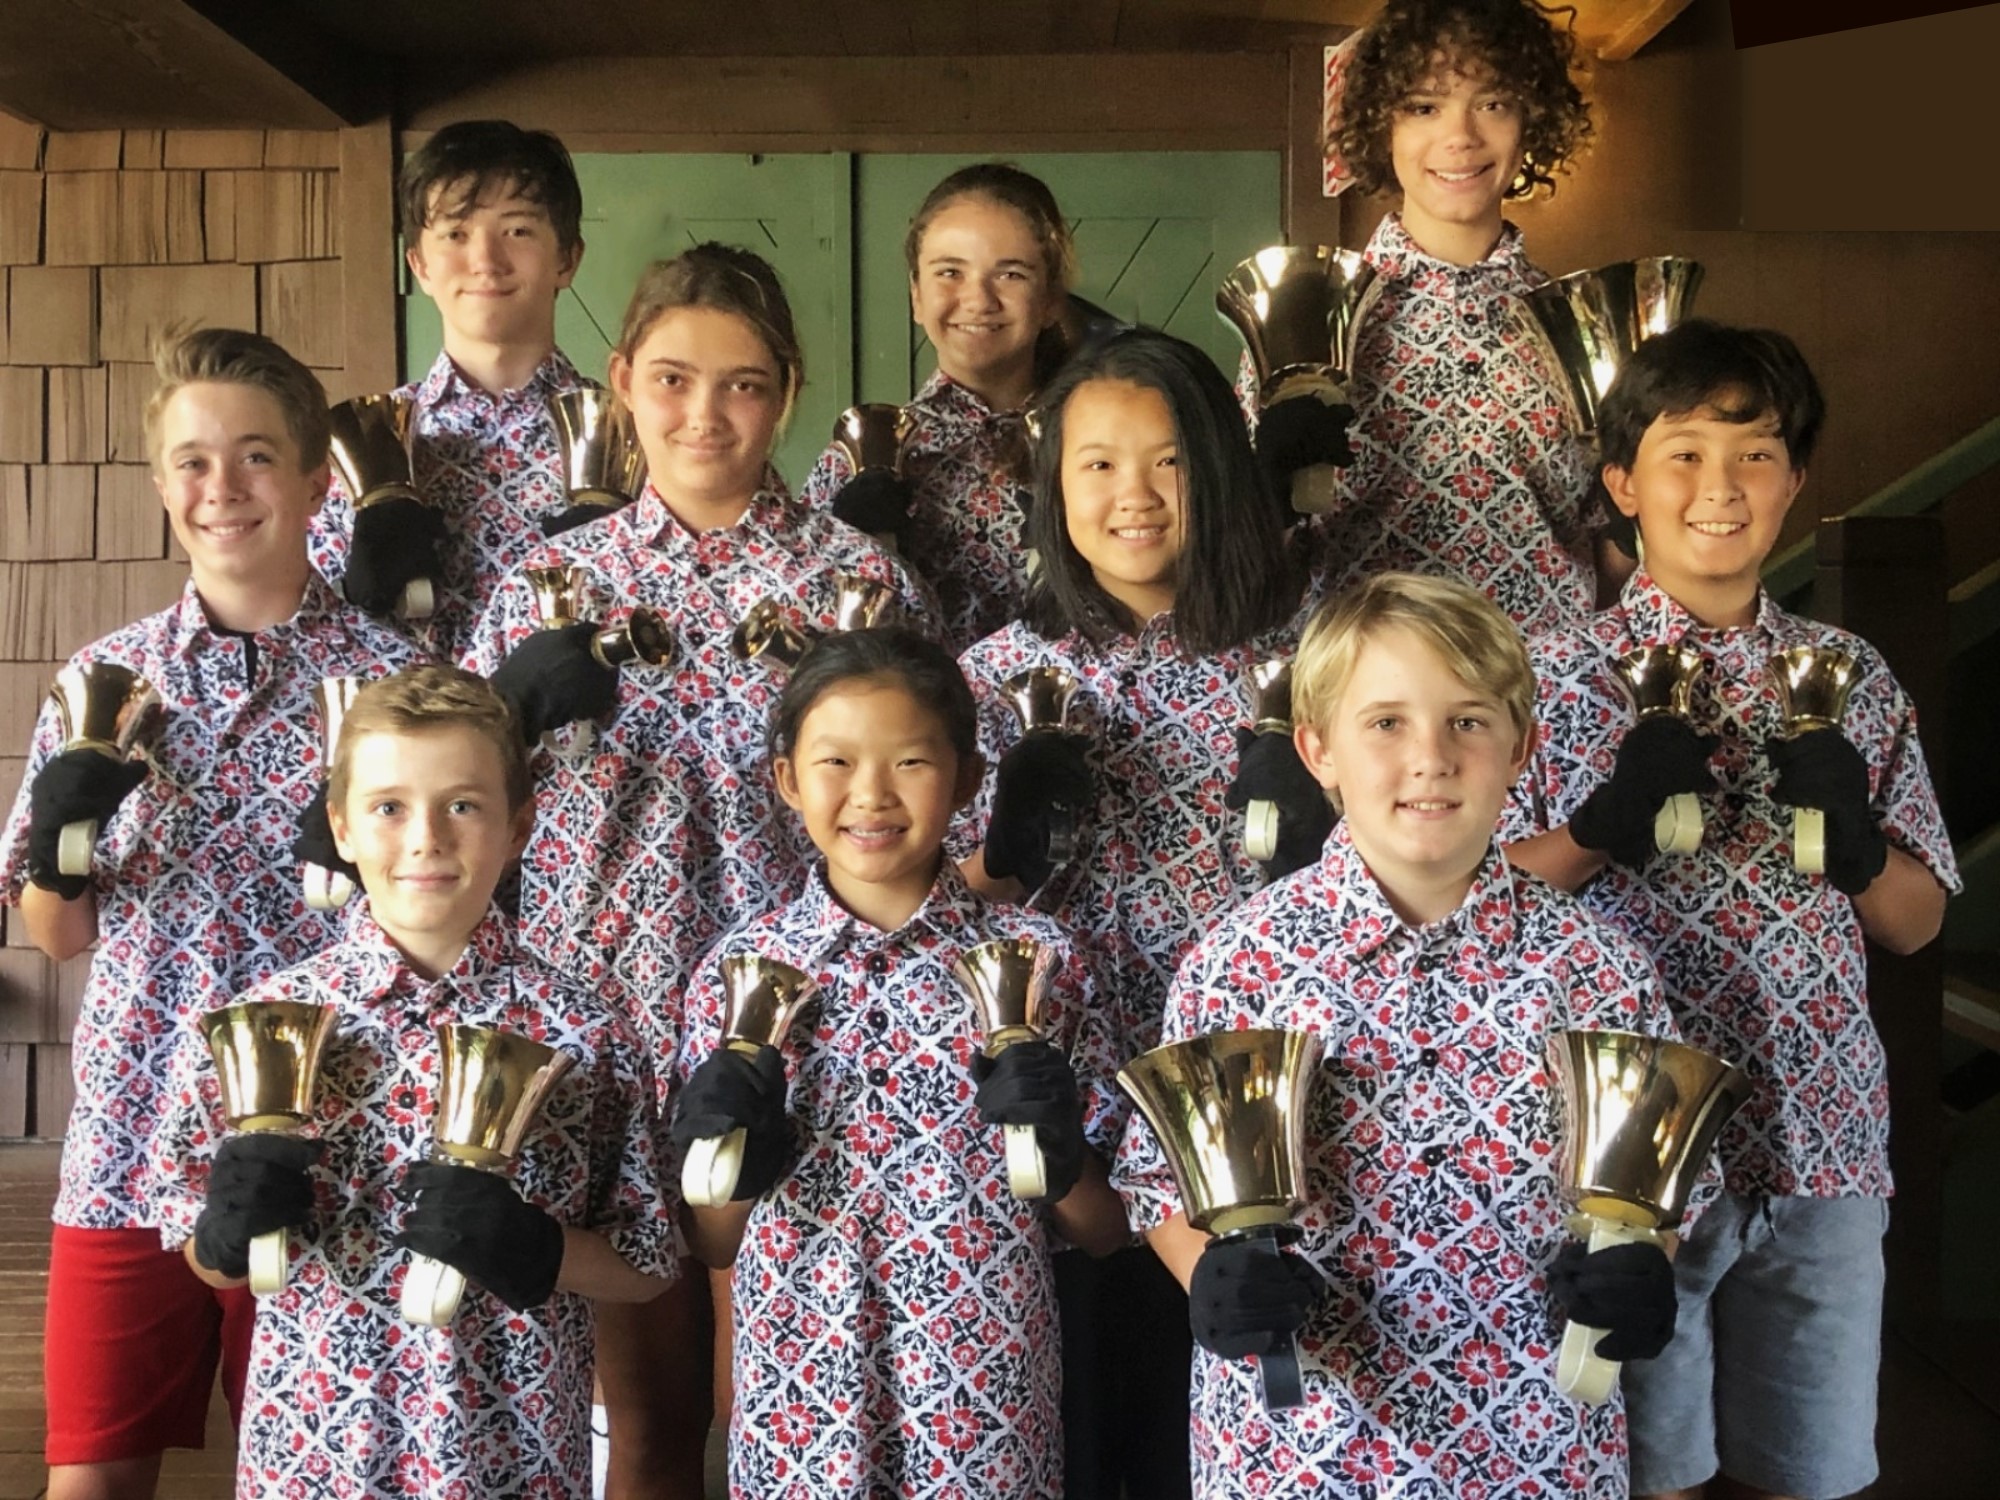 Children from Hawaii Preparatory Academy Middle School Handbell choir holding handbells